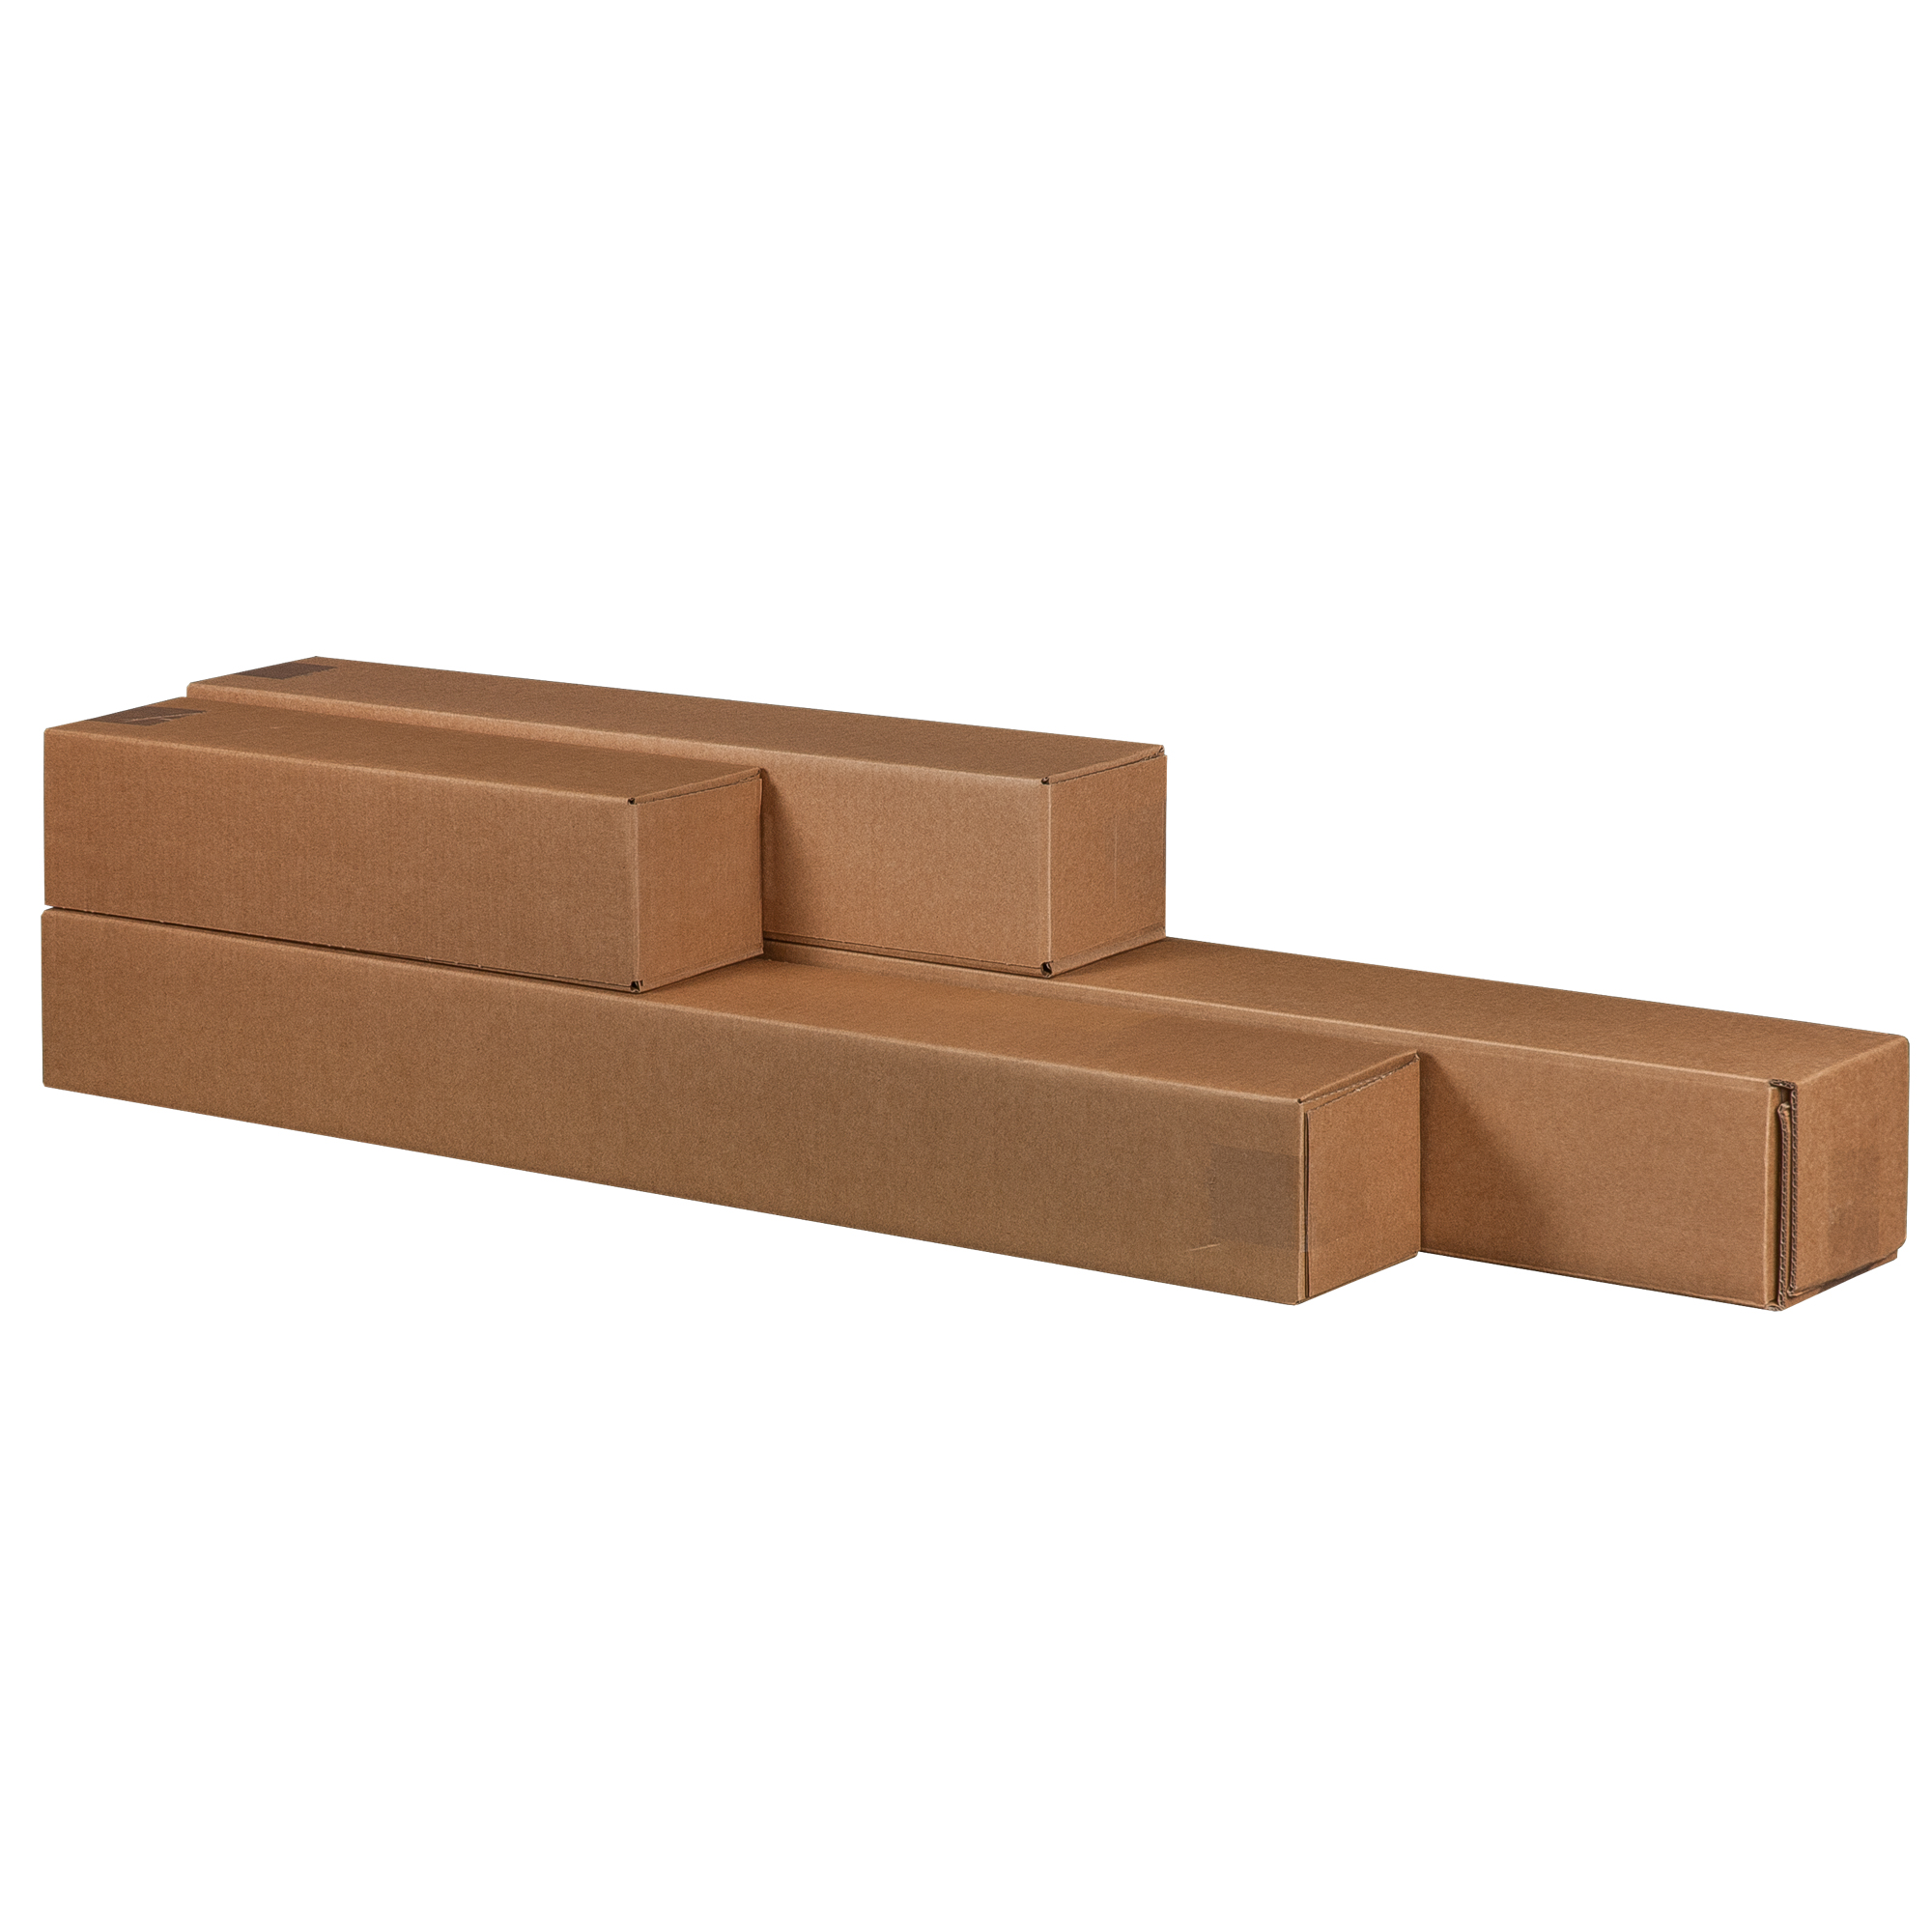 Scatola a tubo Square Box - chiusura a nastro - 10,5 x 10,5 x 87 cm - avana - Bong Packaging - conf. 10 pezzi